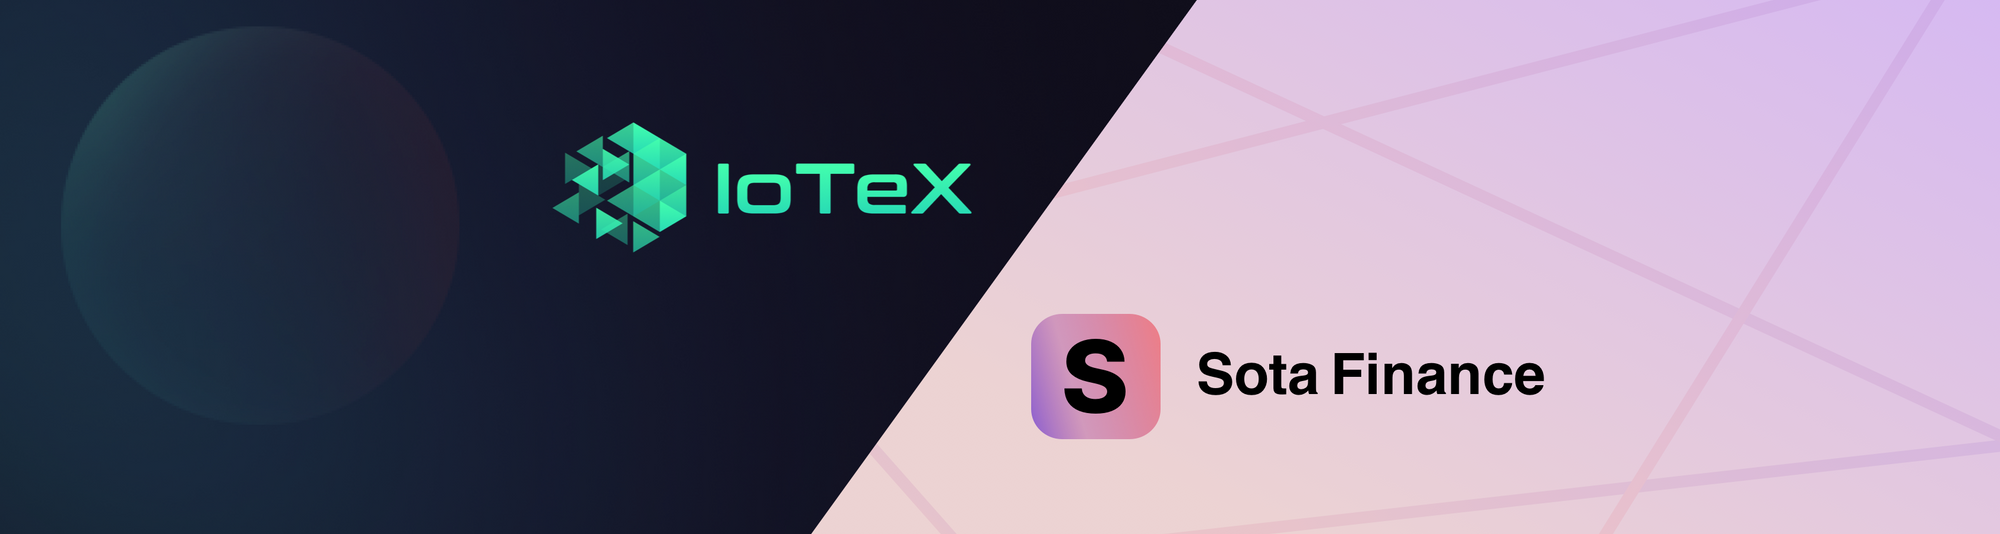 iotex-welcomes-sota